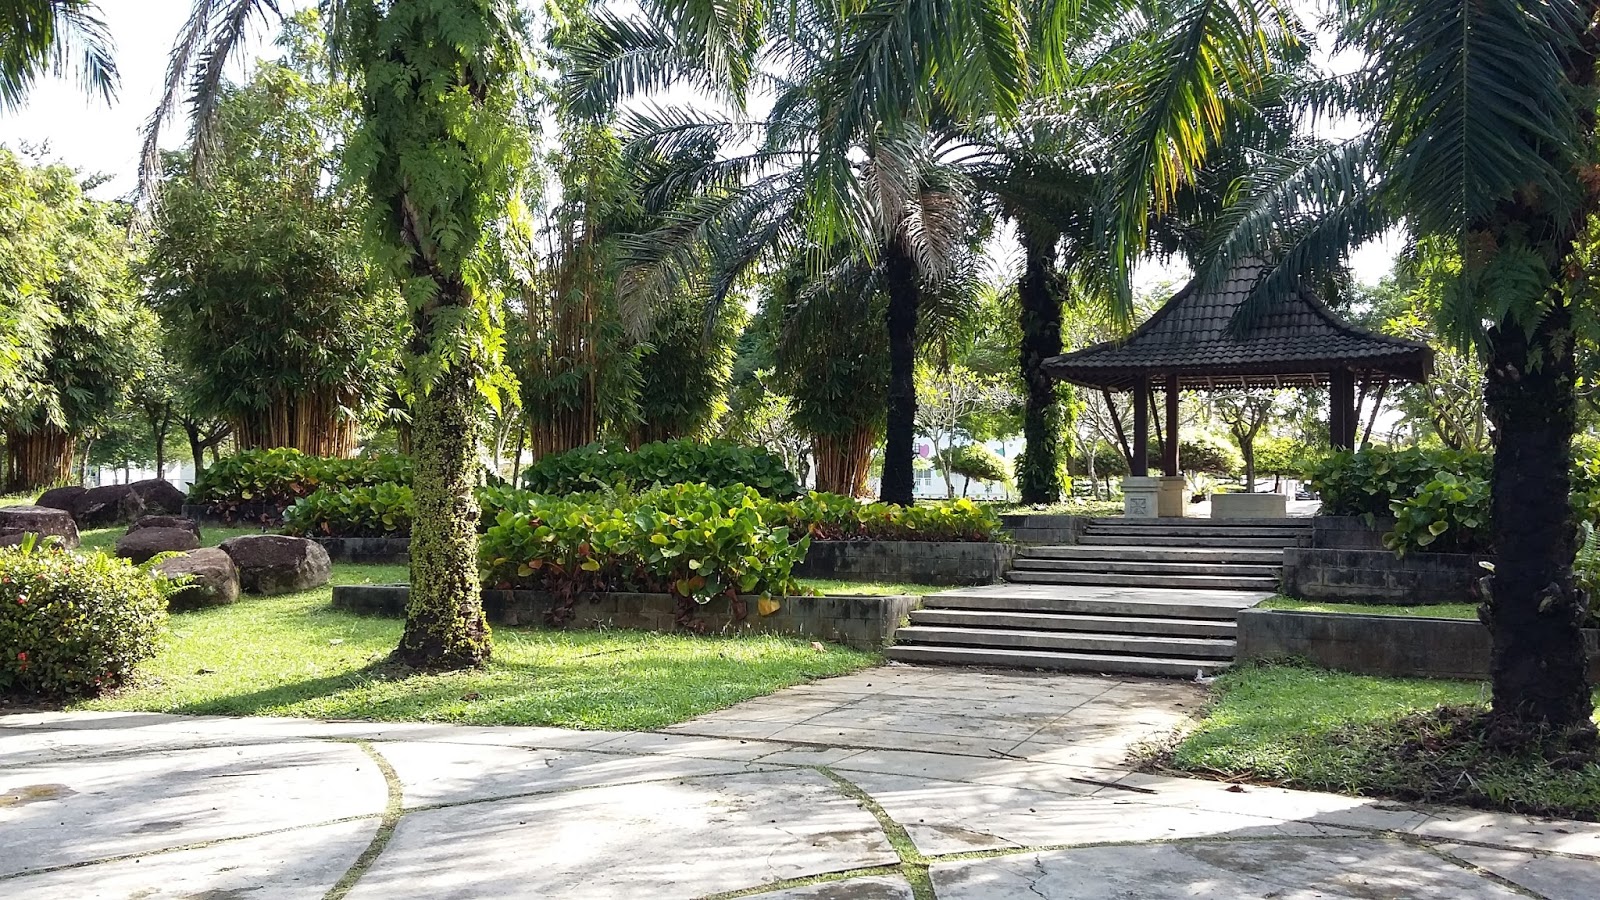 Mohd Faiz bin Abdul Manan: Setia Alam Central Park